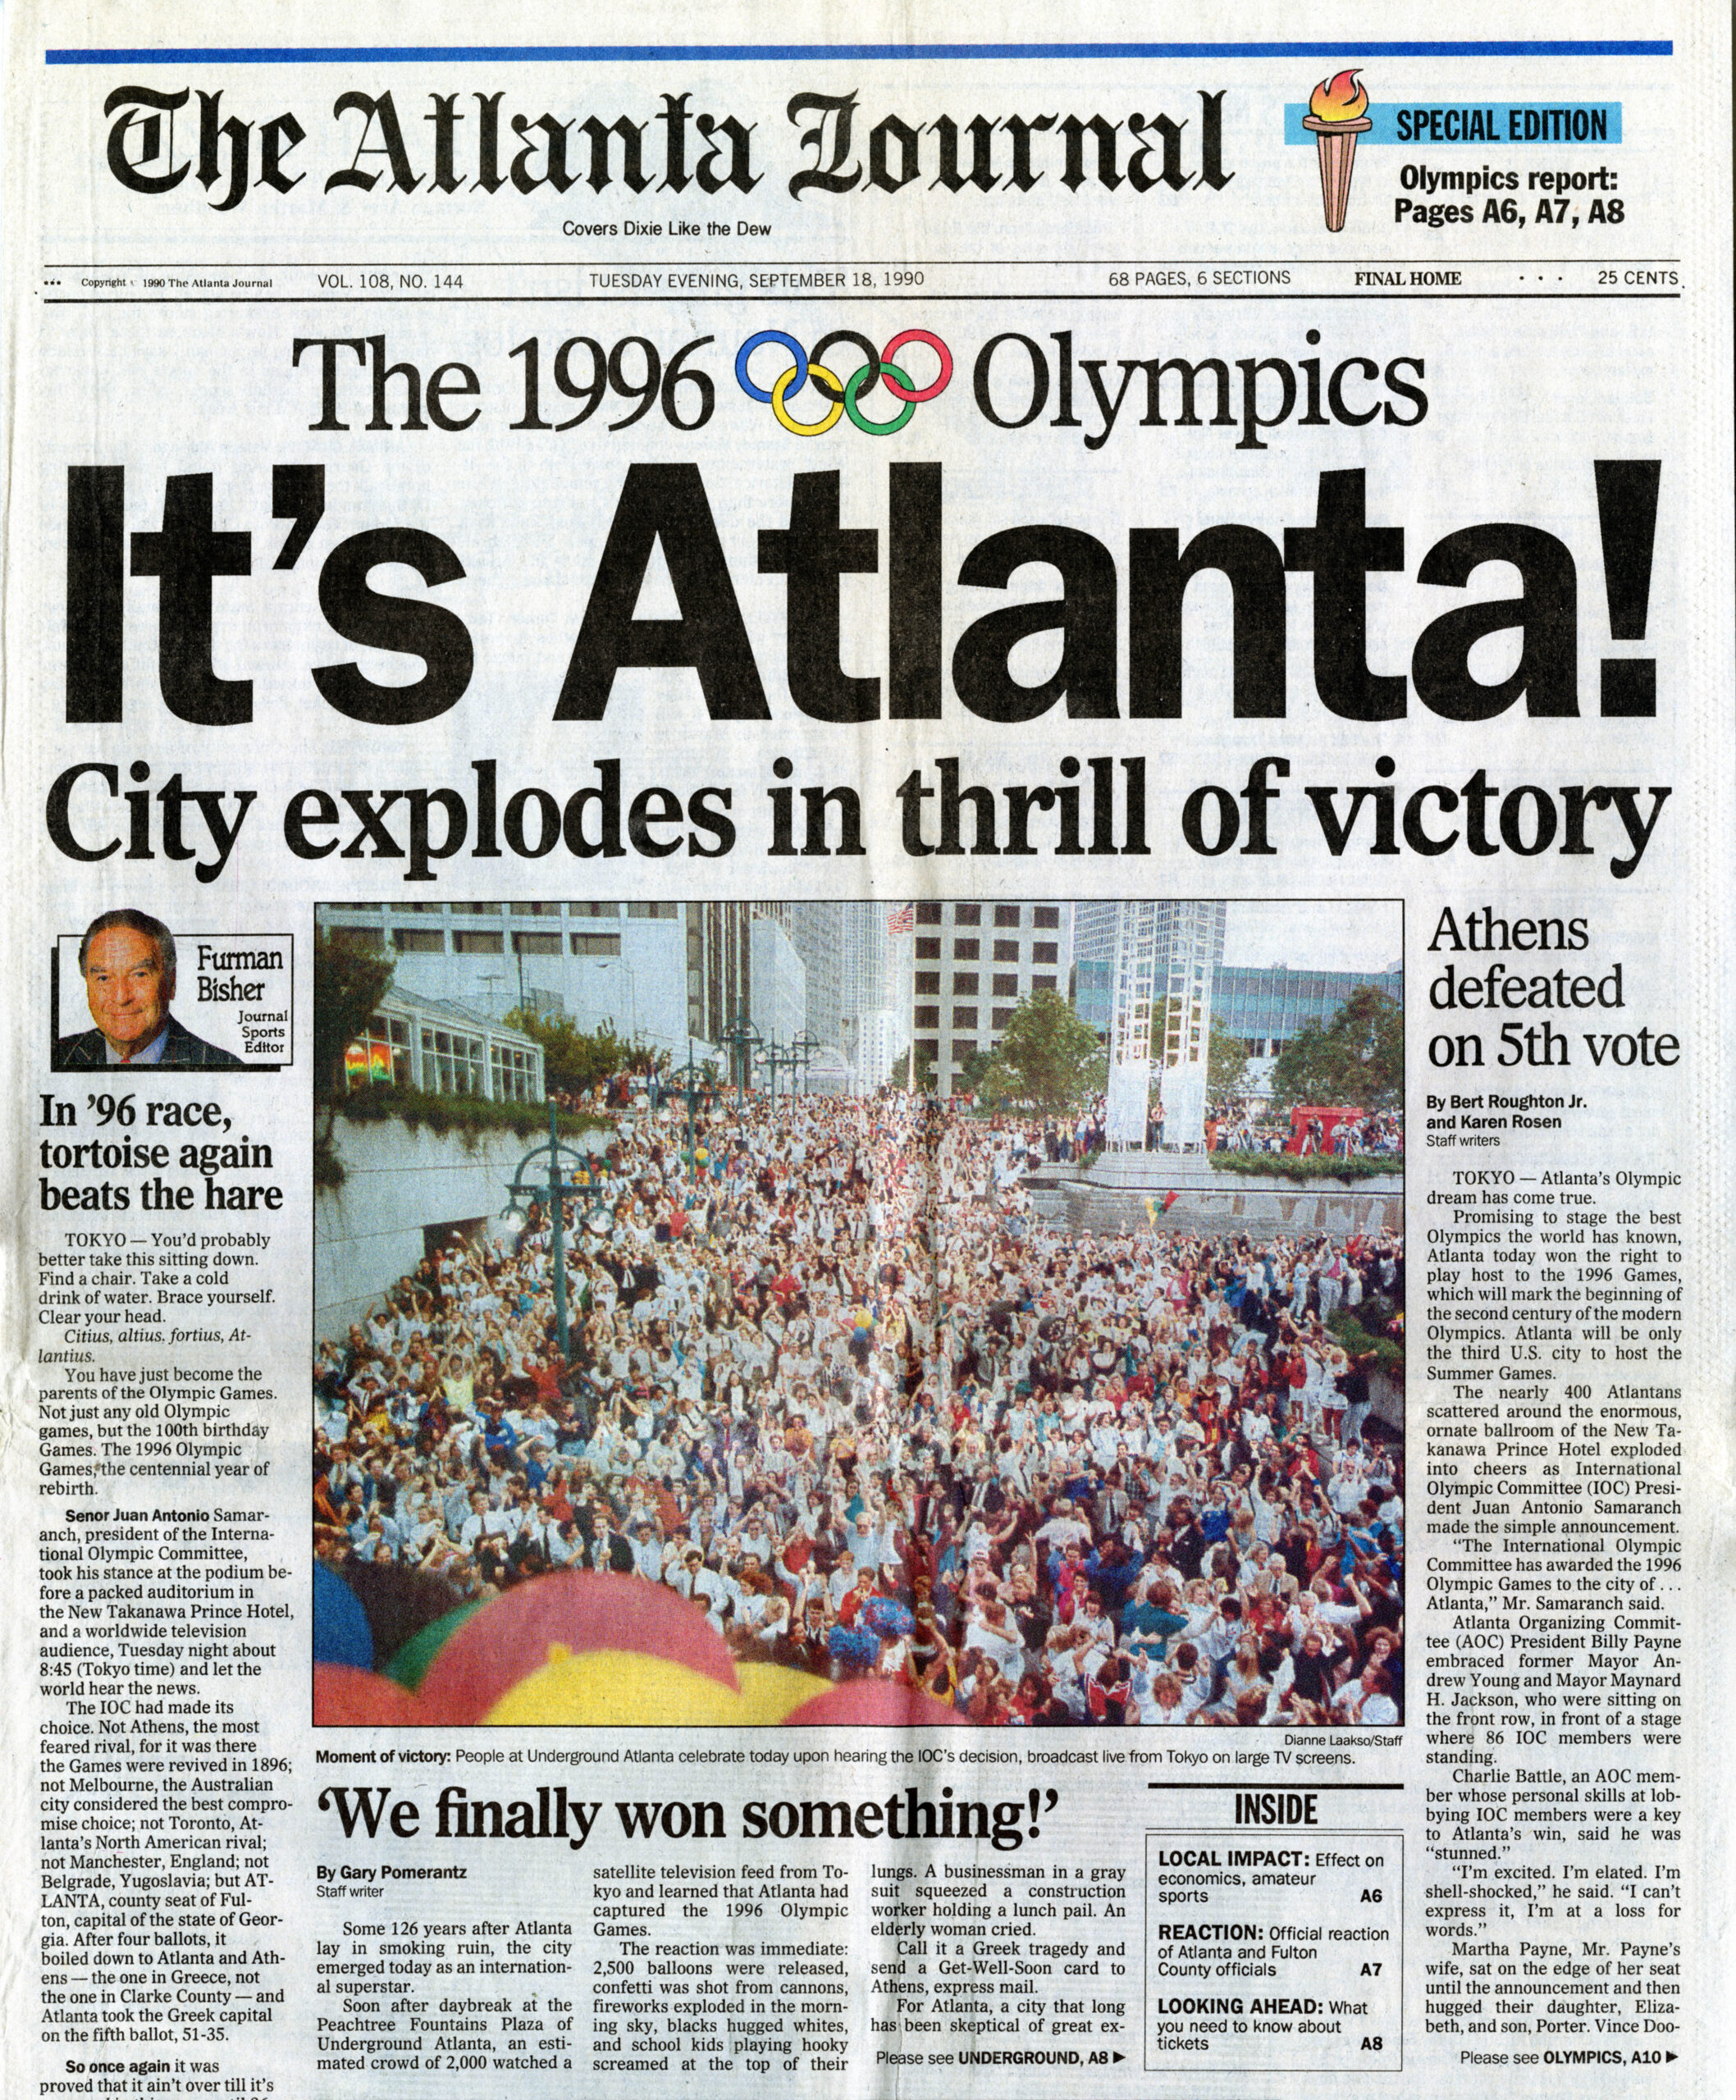 Atlanta Journal, "It's Atlanta!" Headline and body